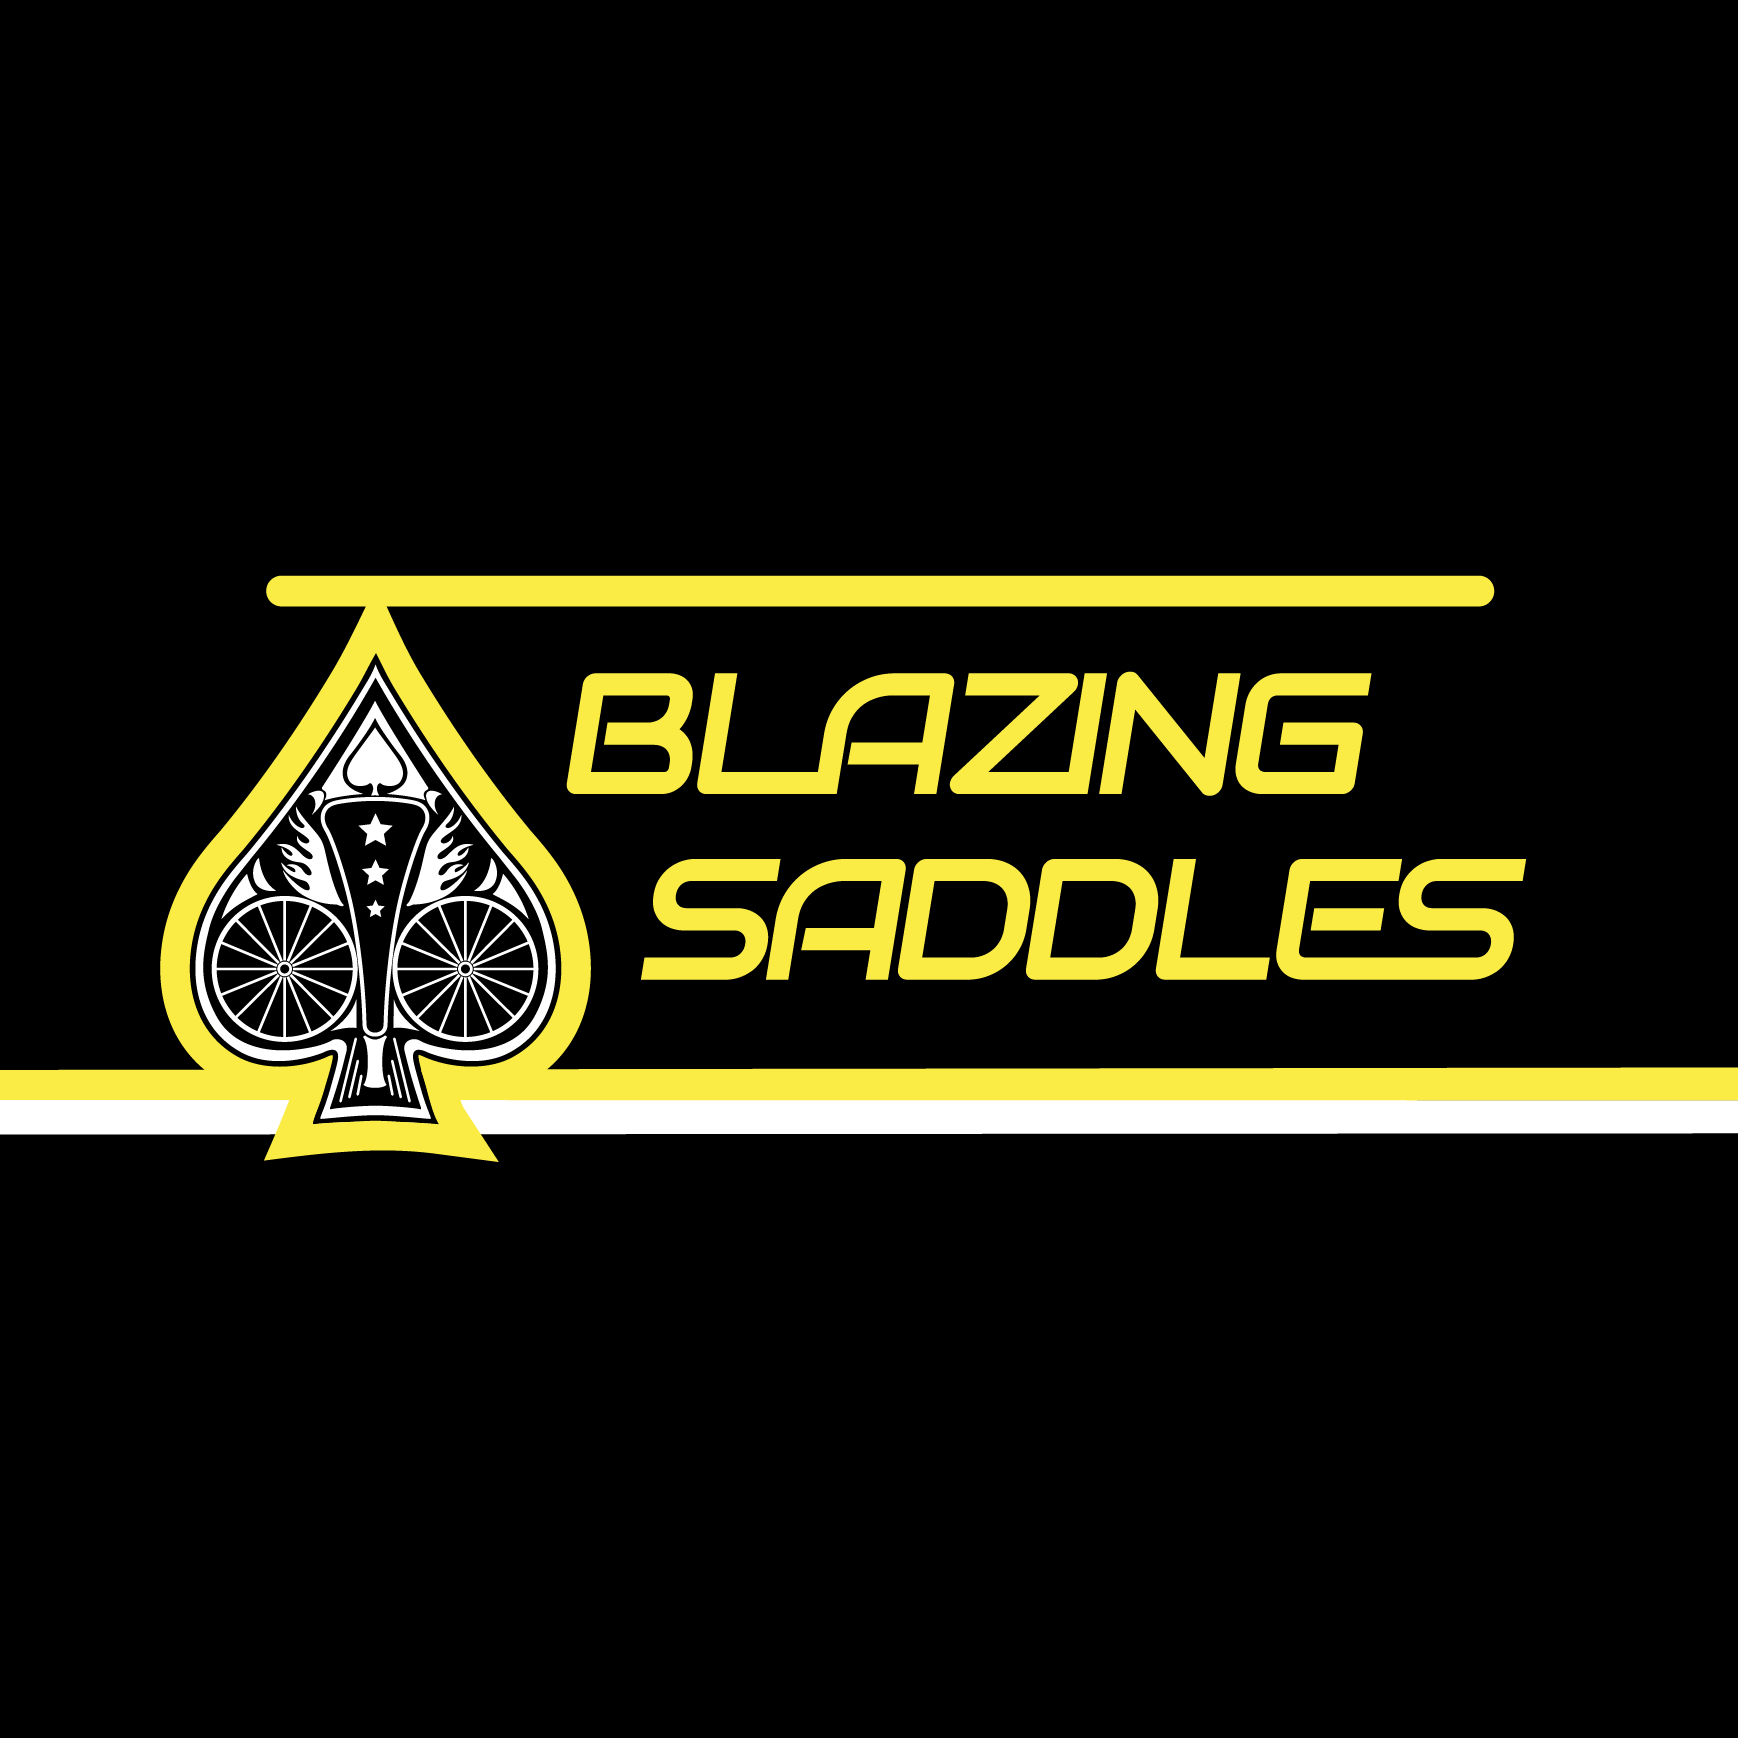 Club Image for BLAZING SADDLES